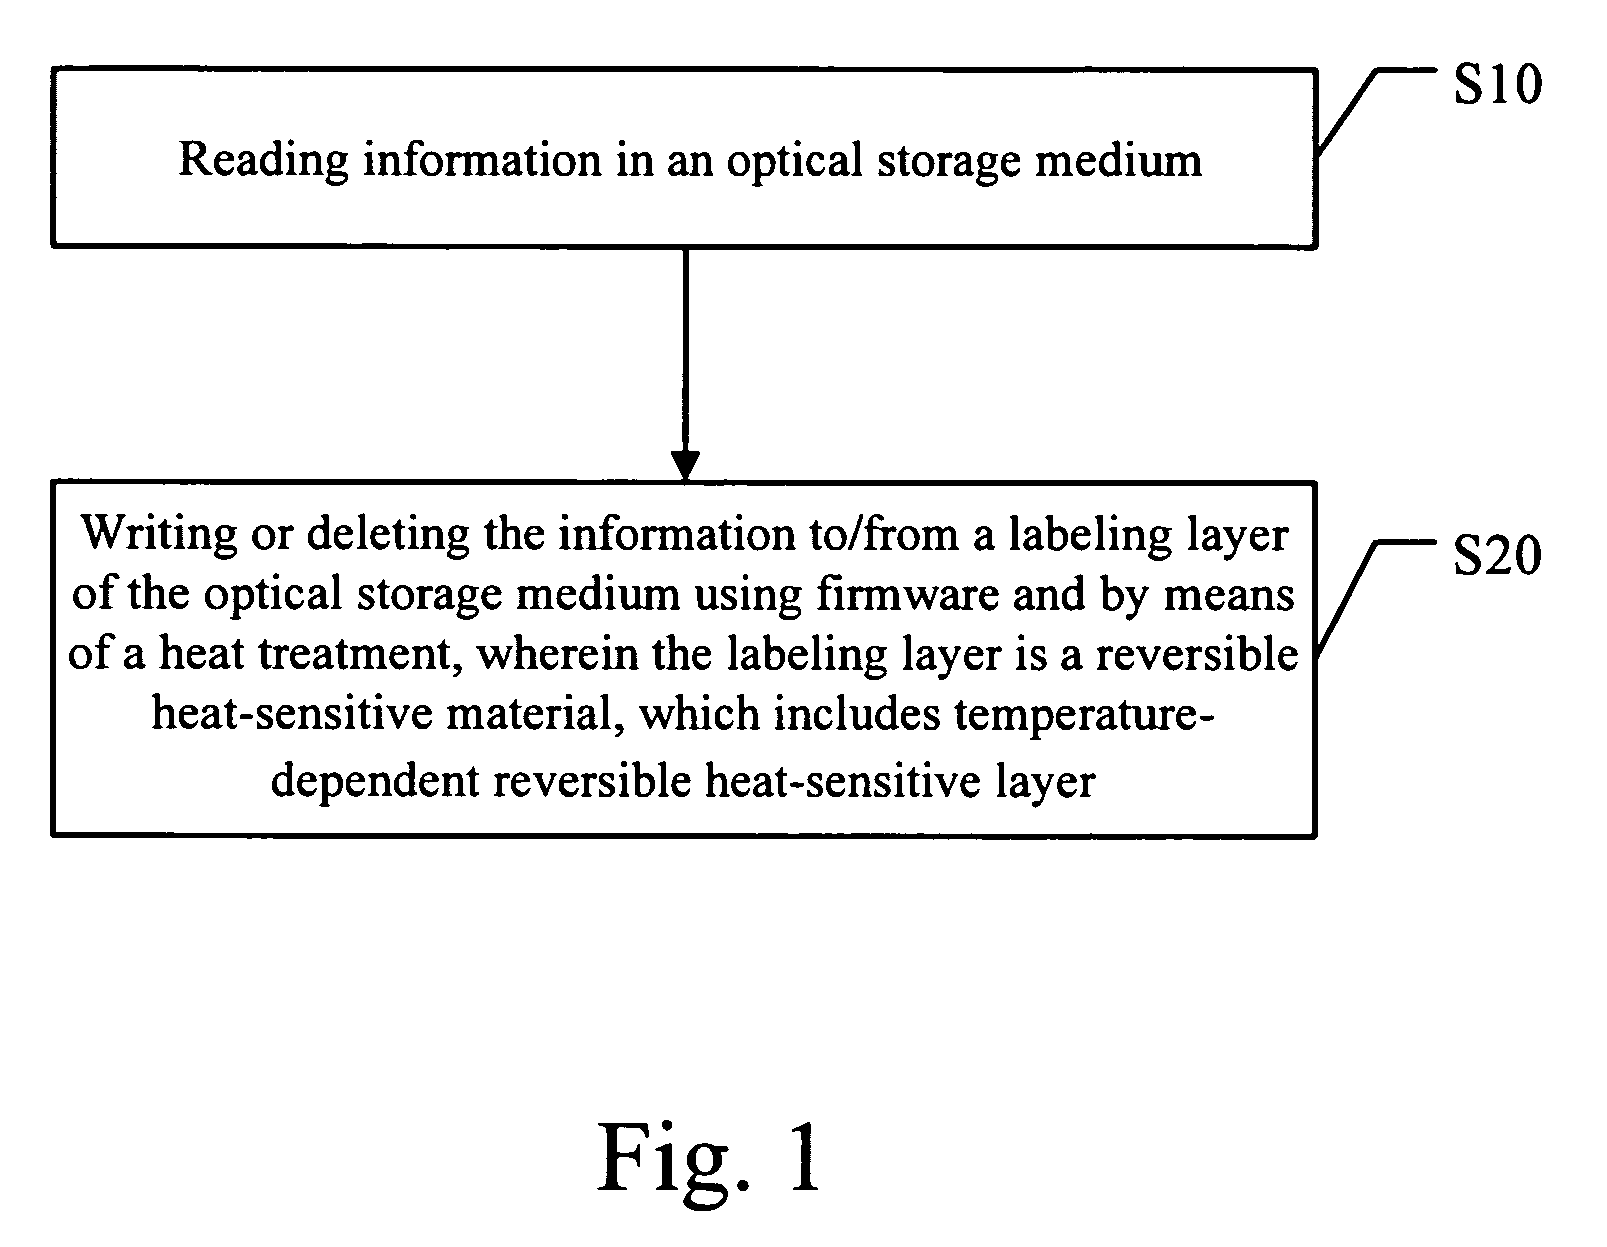 Method for labeling rewritable optical storage media